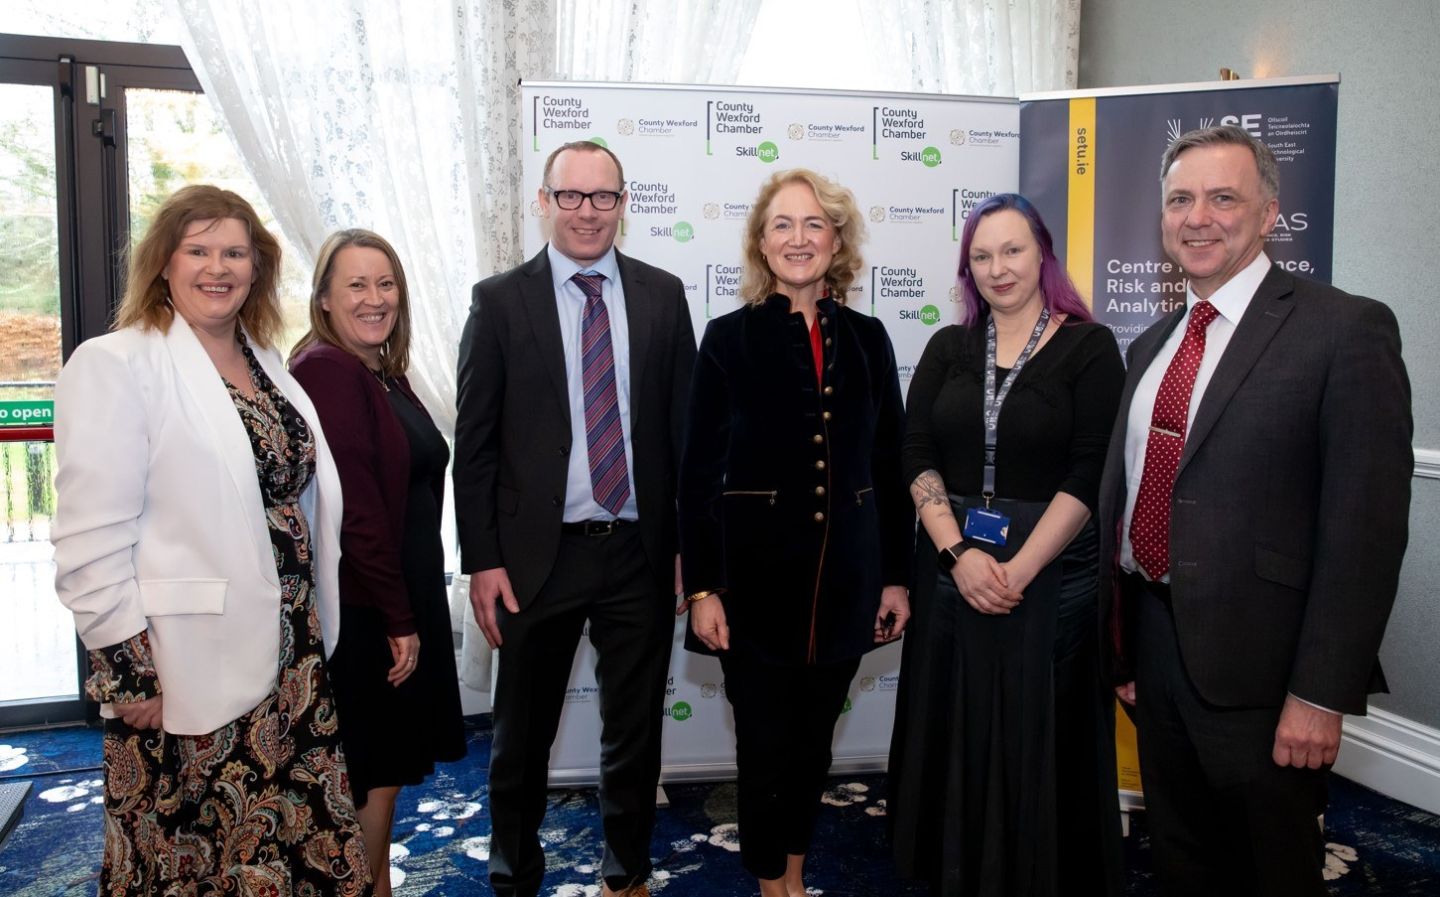 SETU hosts wellbeing summit with County Wexford Chamber Skillnet